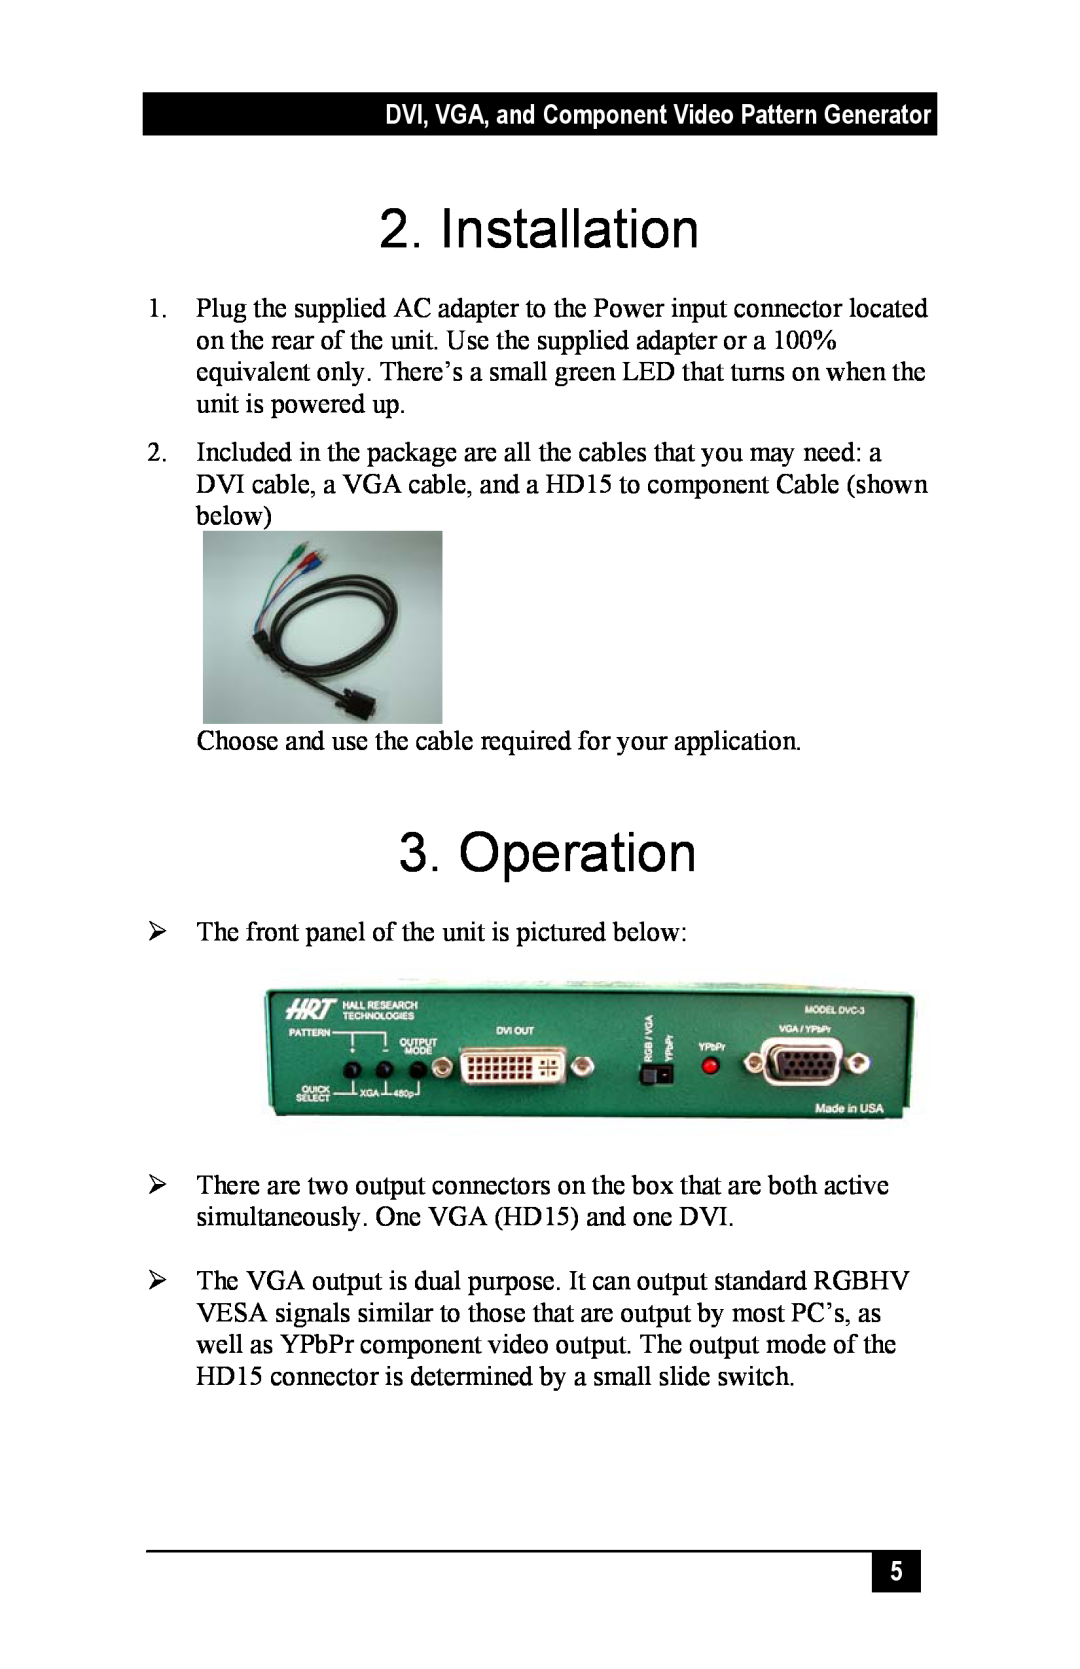 Sun Microsystems DVC-3 manual Installation, Operation, DVI, VGA, and Component Video Pattern Generator 